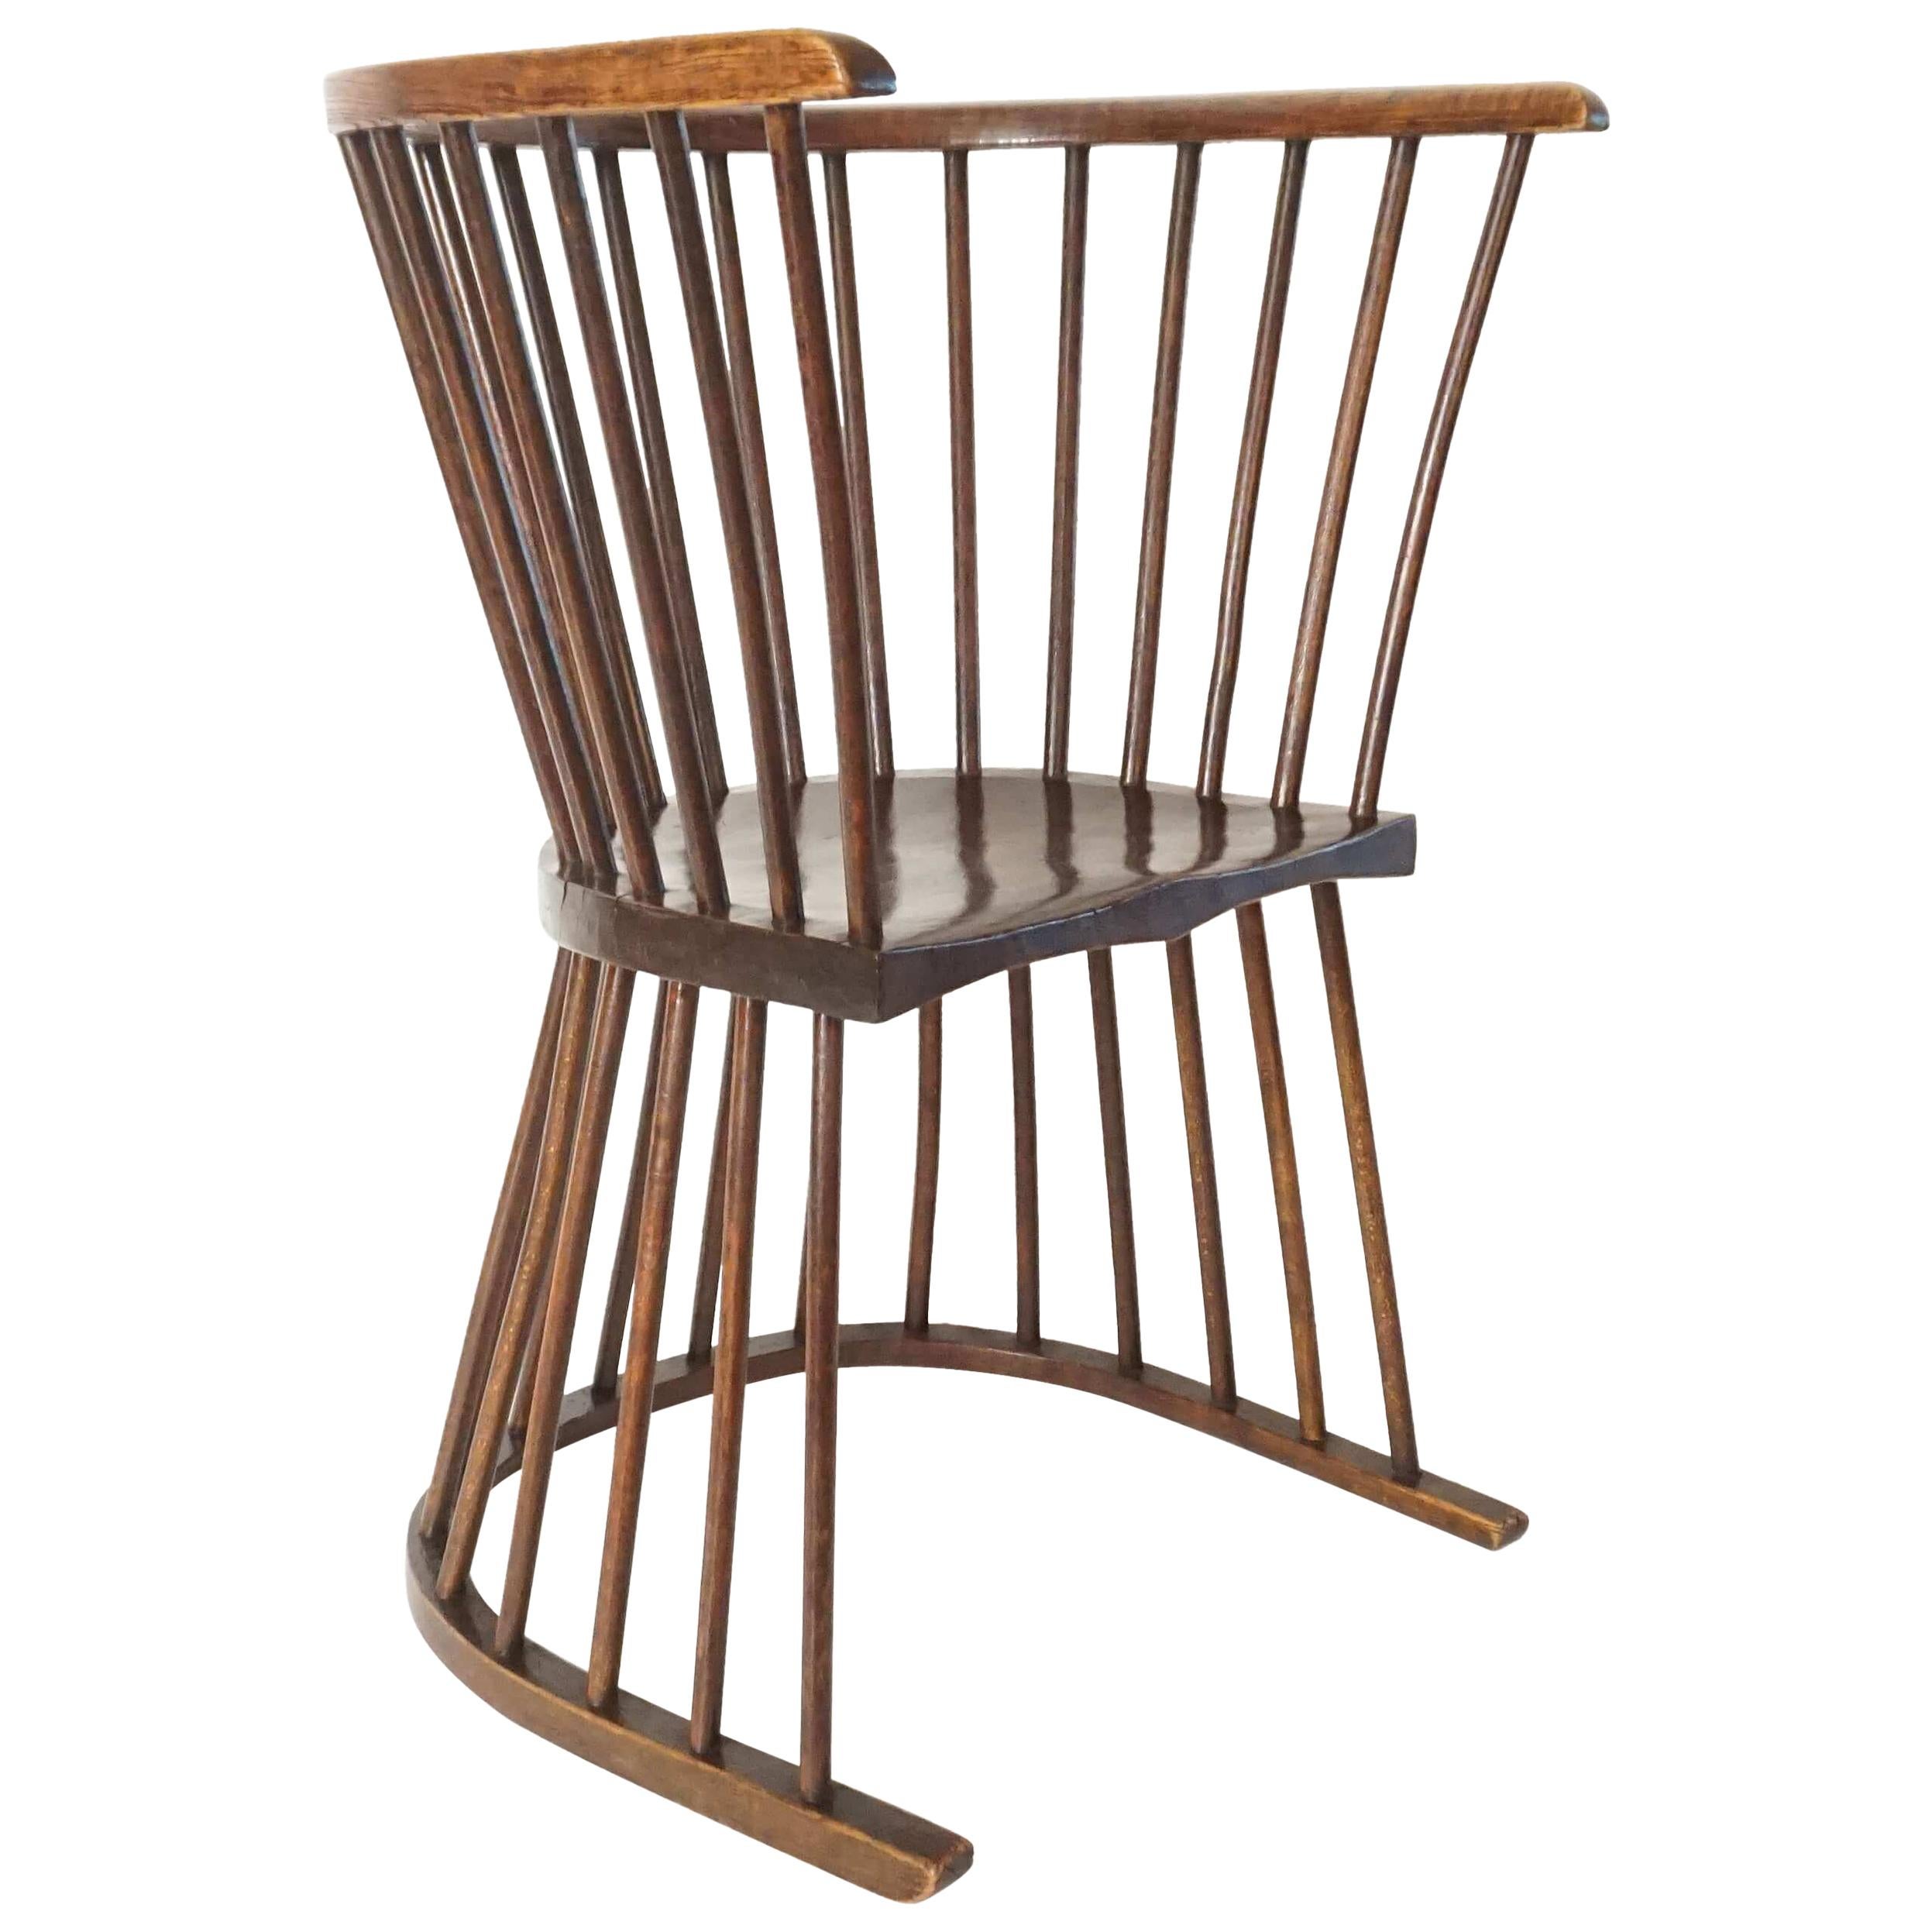 English Arts & Crafts Chair by Hugo Erskine Wemyss, circa 1905